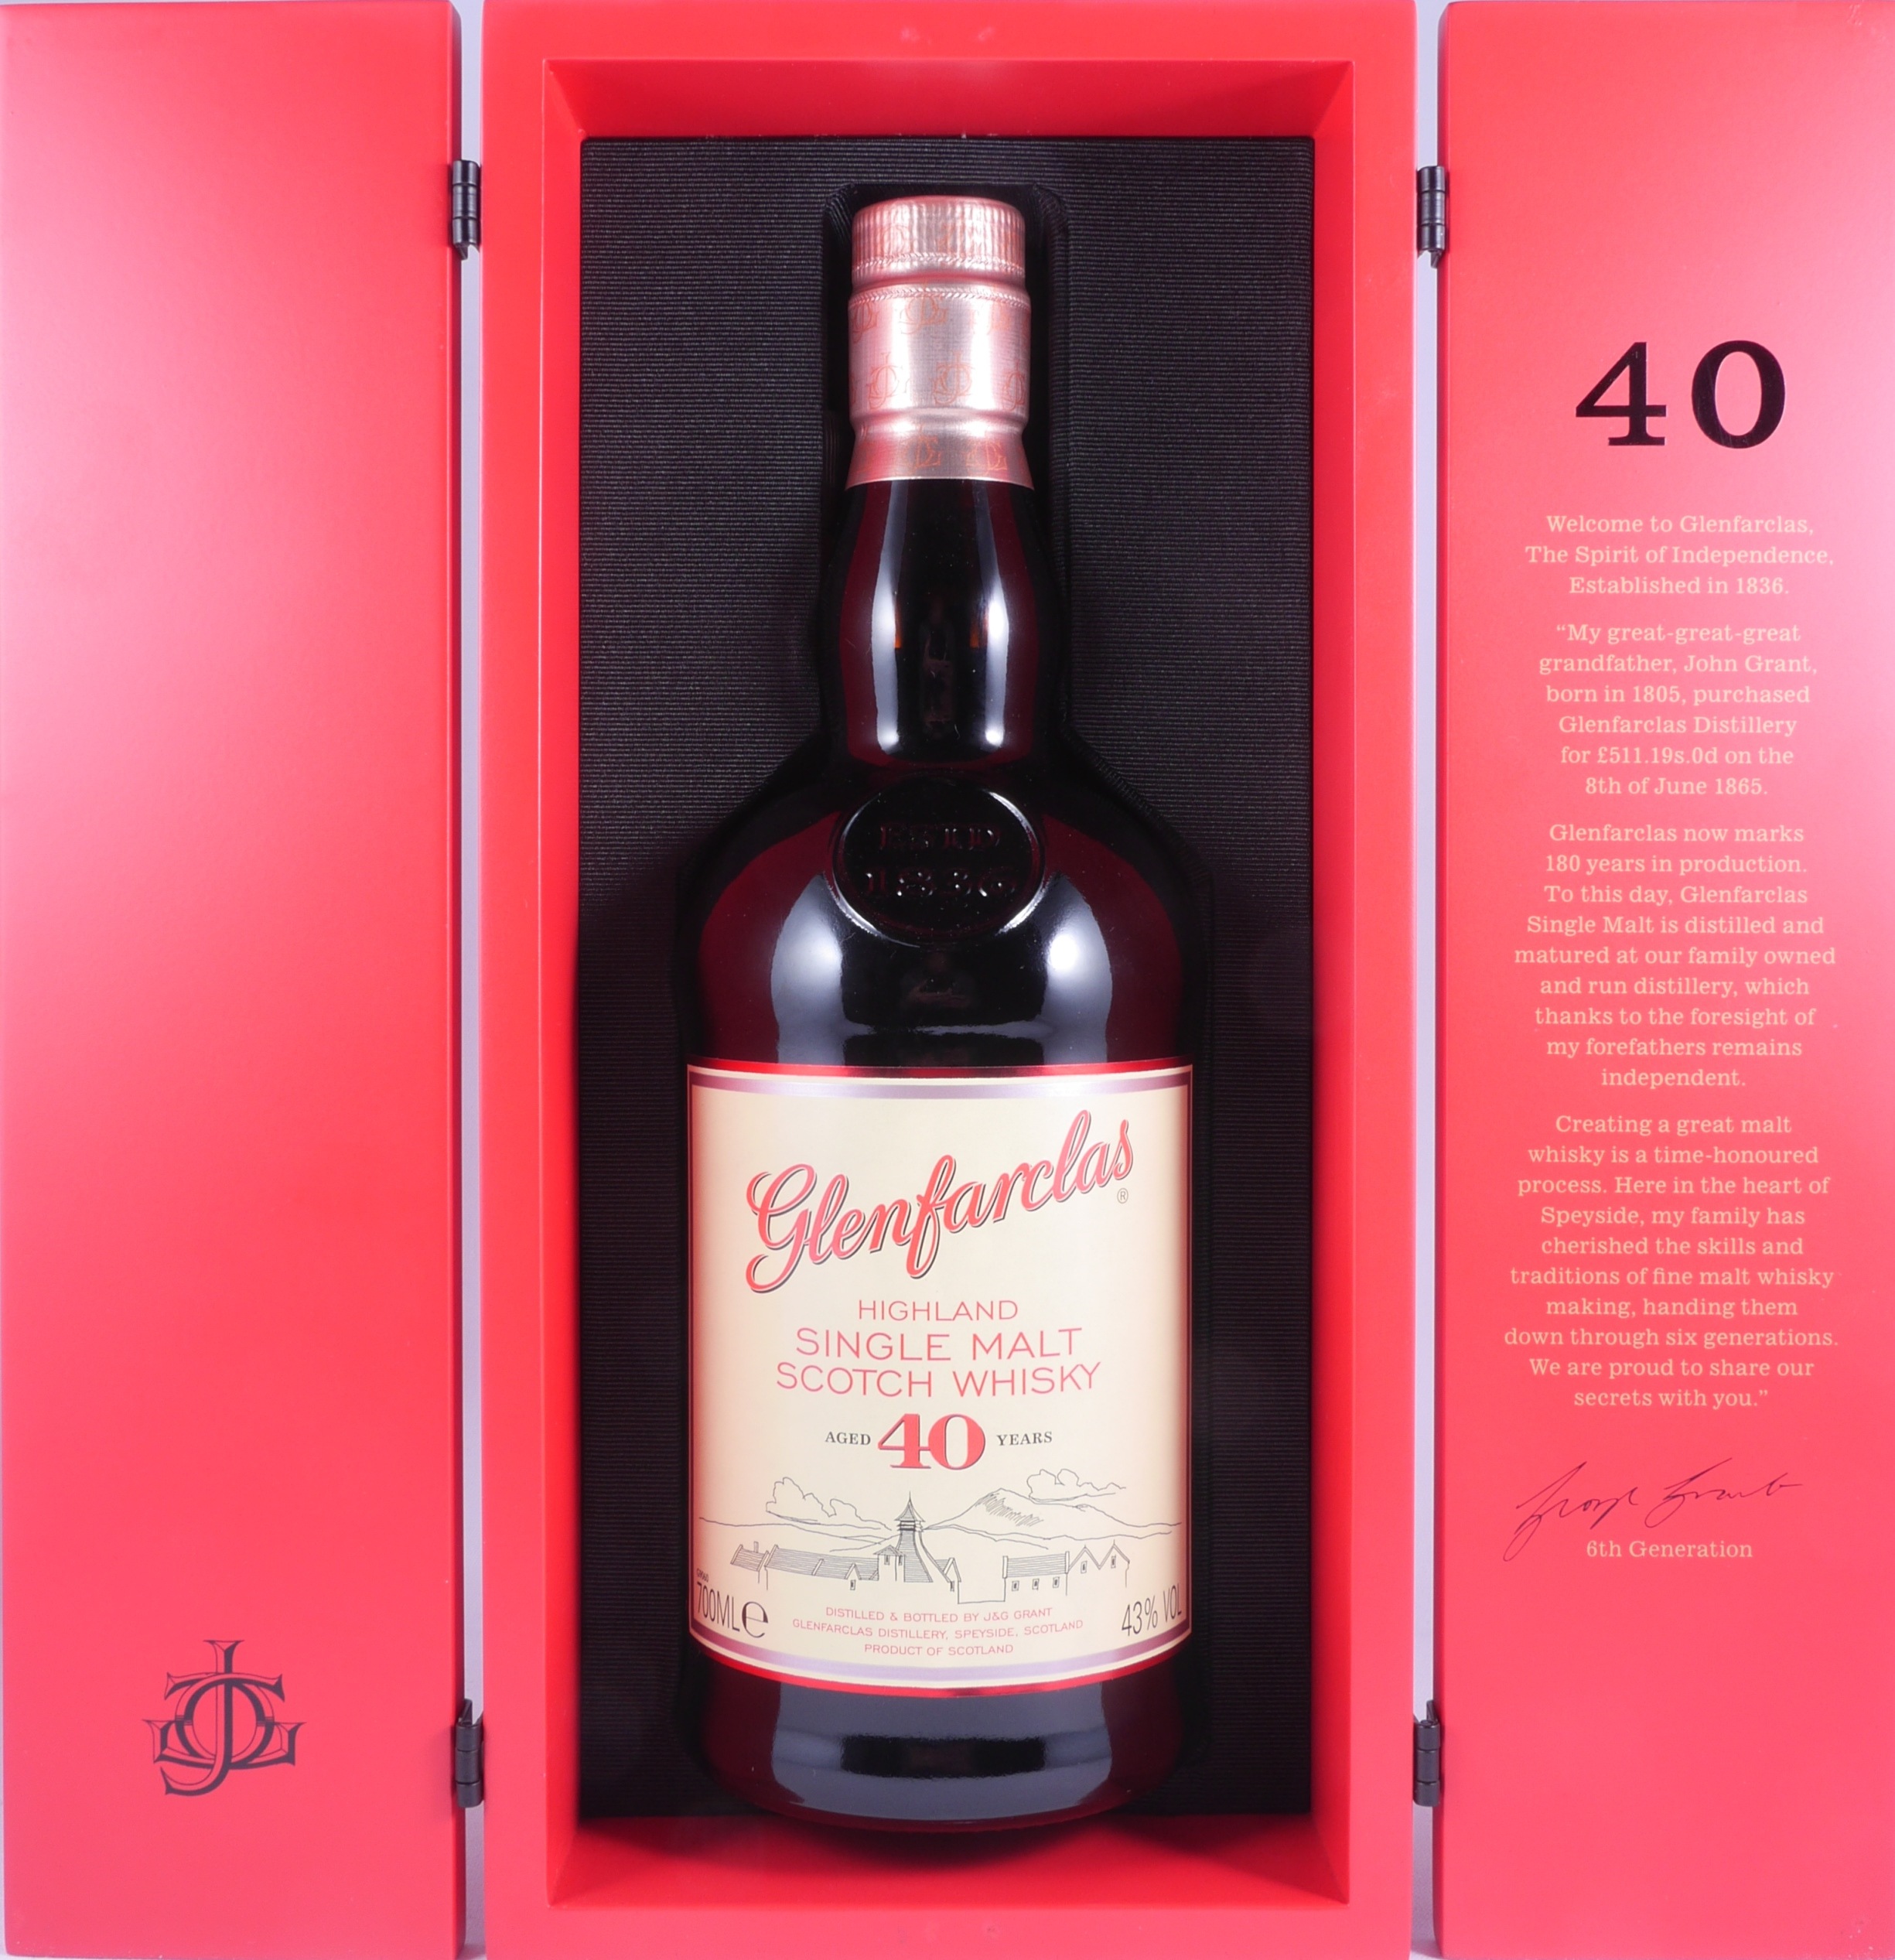 Sherry Amcom Years-old Highland Release Single Buy 2017 Edition online Whisky 40 Casks ABV Scotch Limited secure Warehouse at Oloroso 43.0% Glenfarclas Malt